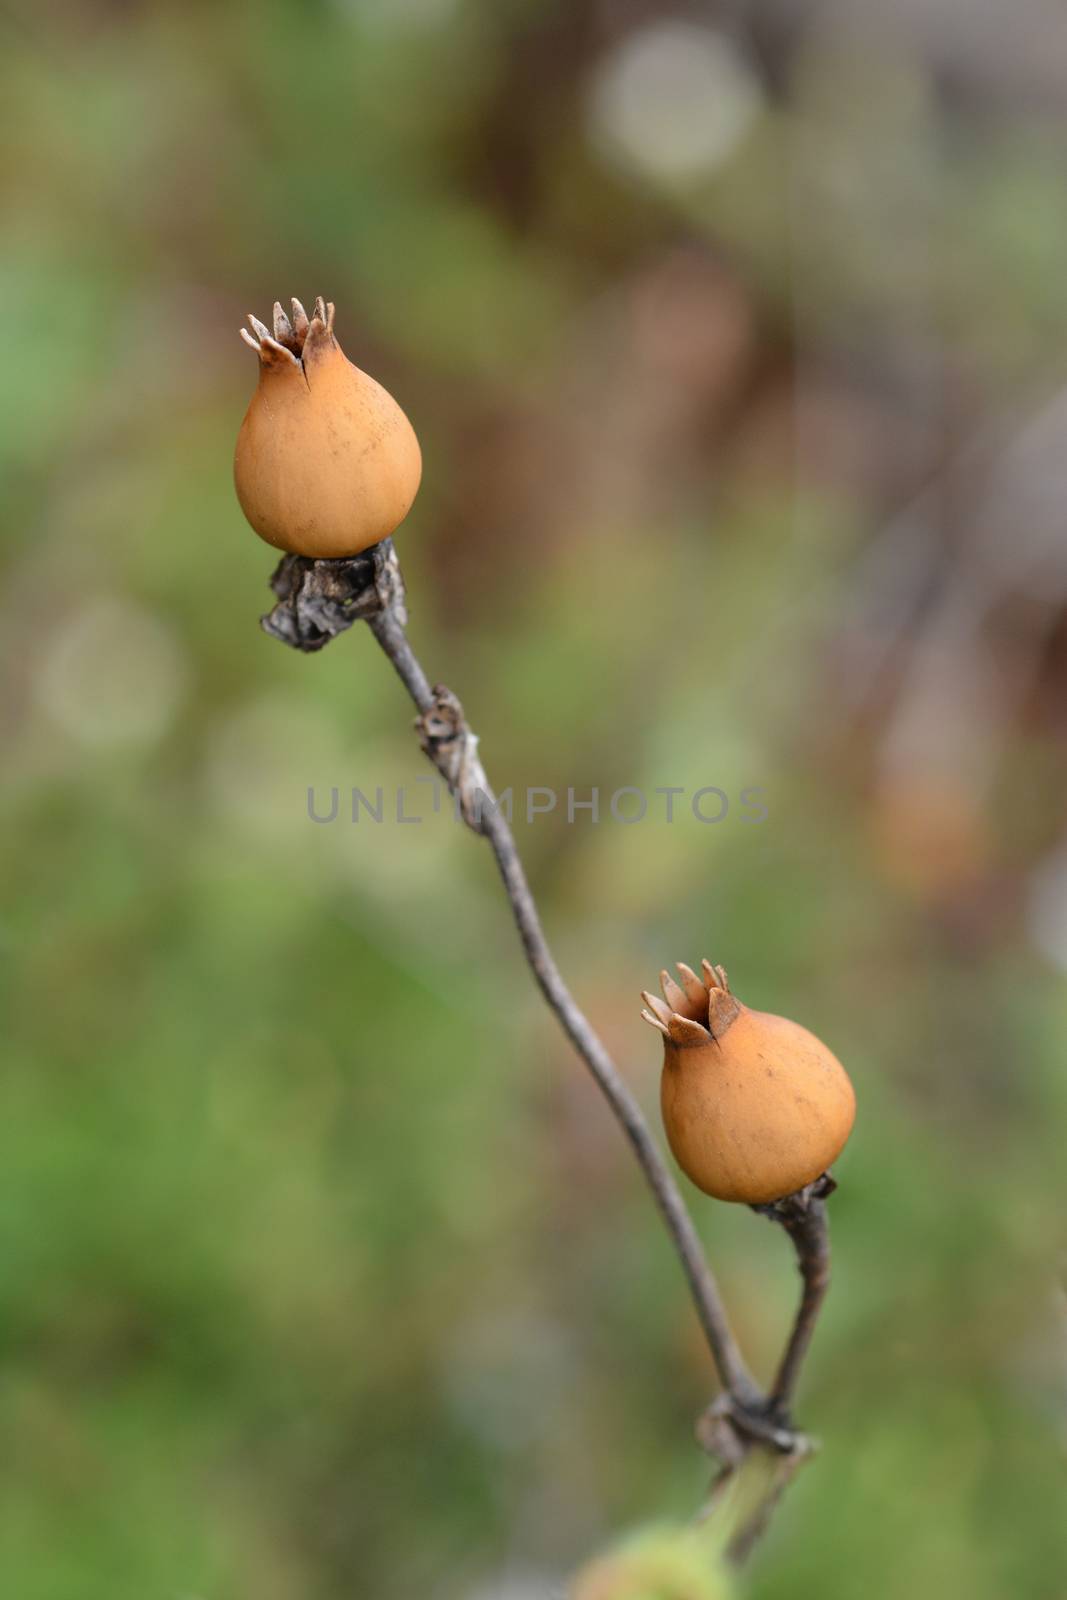 Campion seed capsules - Latin name - Silene paradoxa